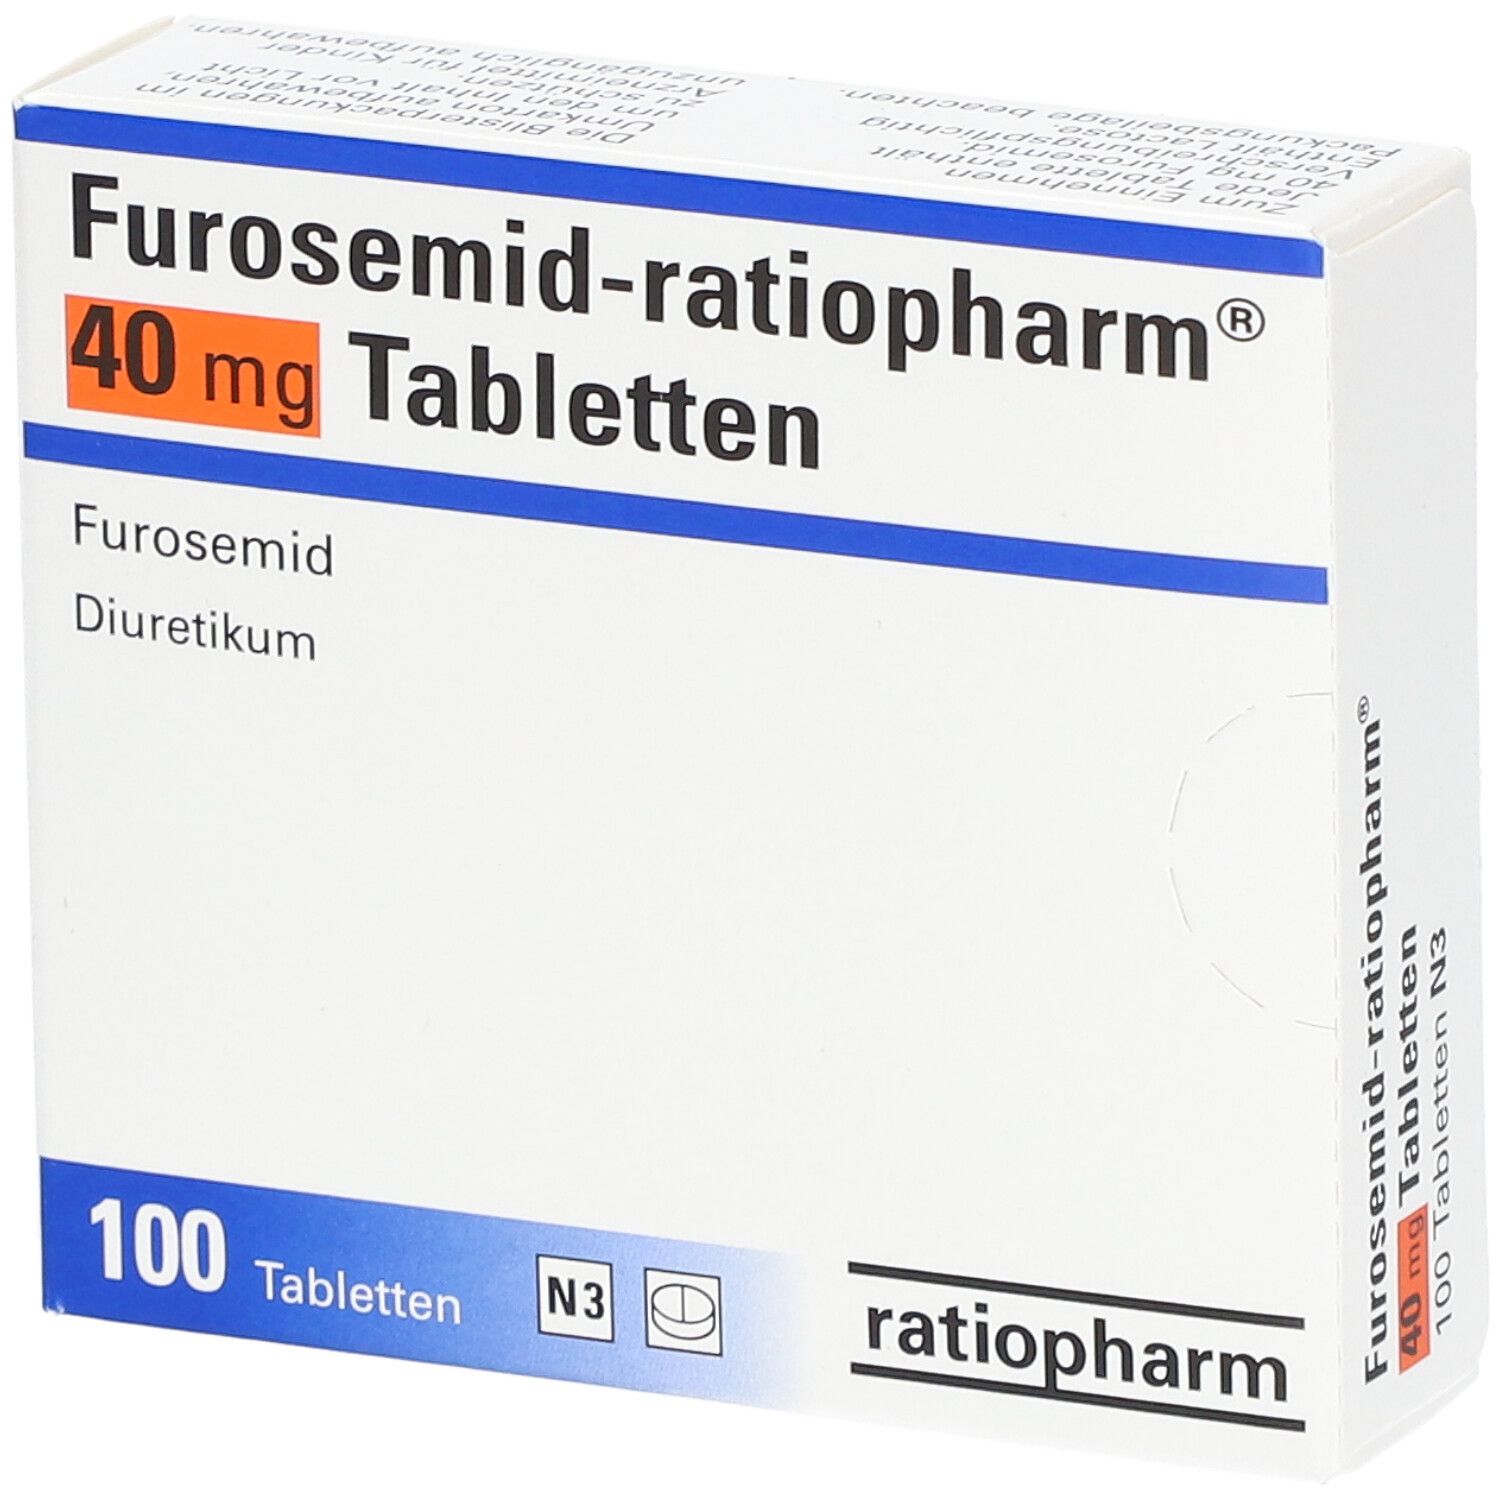 Furosemid-ratiopharm® 40 mg